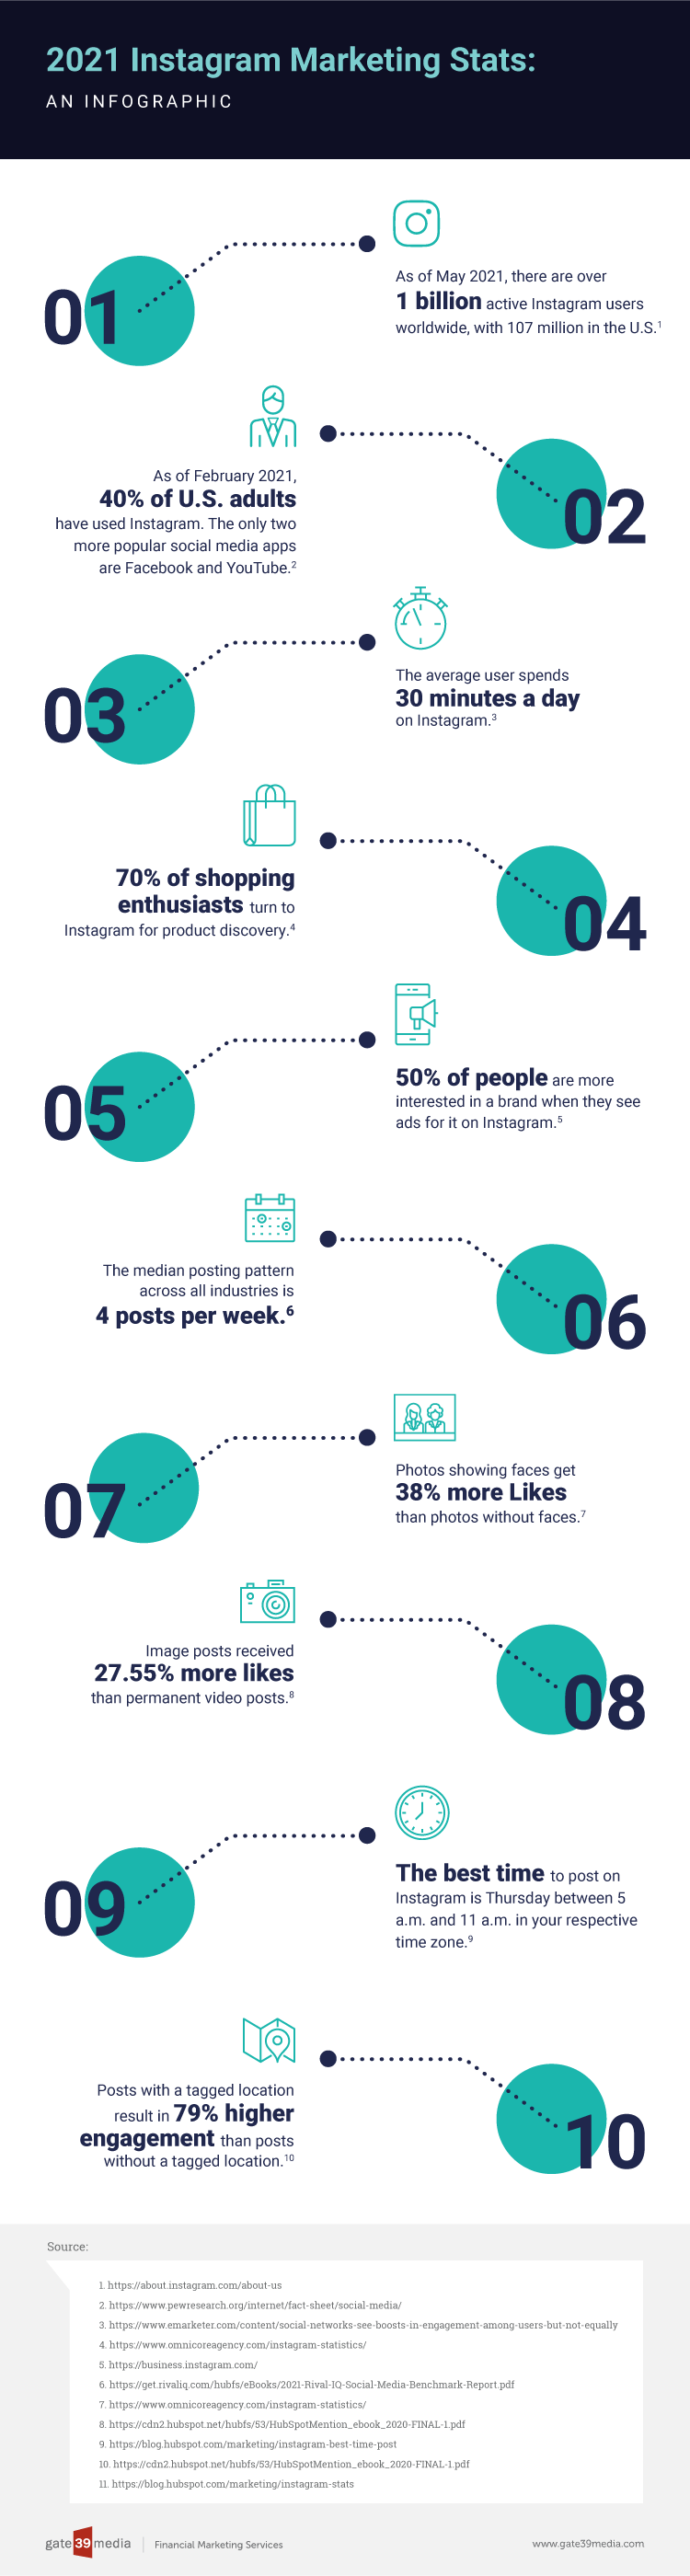 Instagram Marketing Statistics Infographic 2021